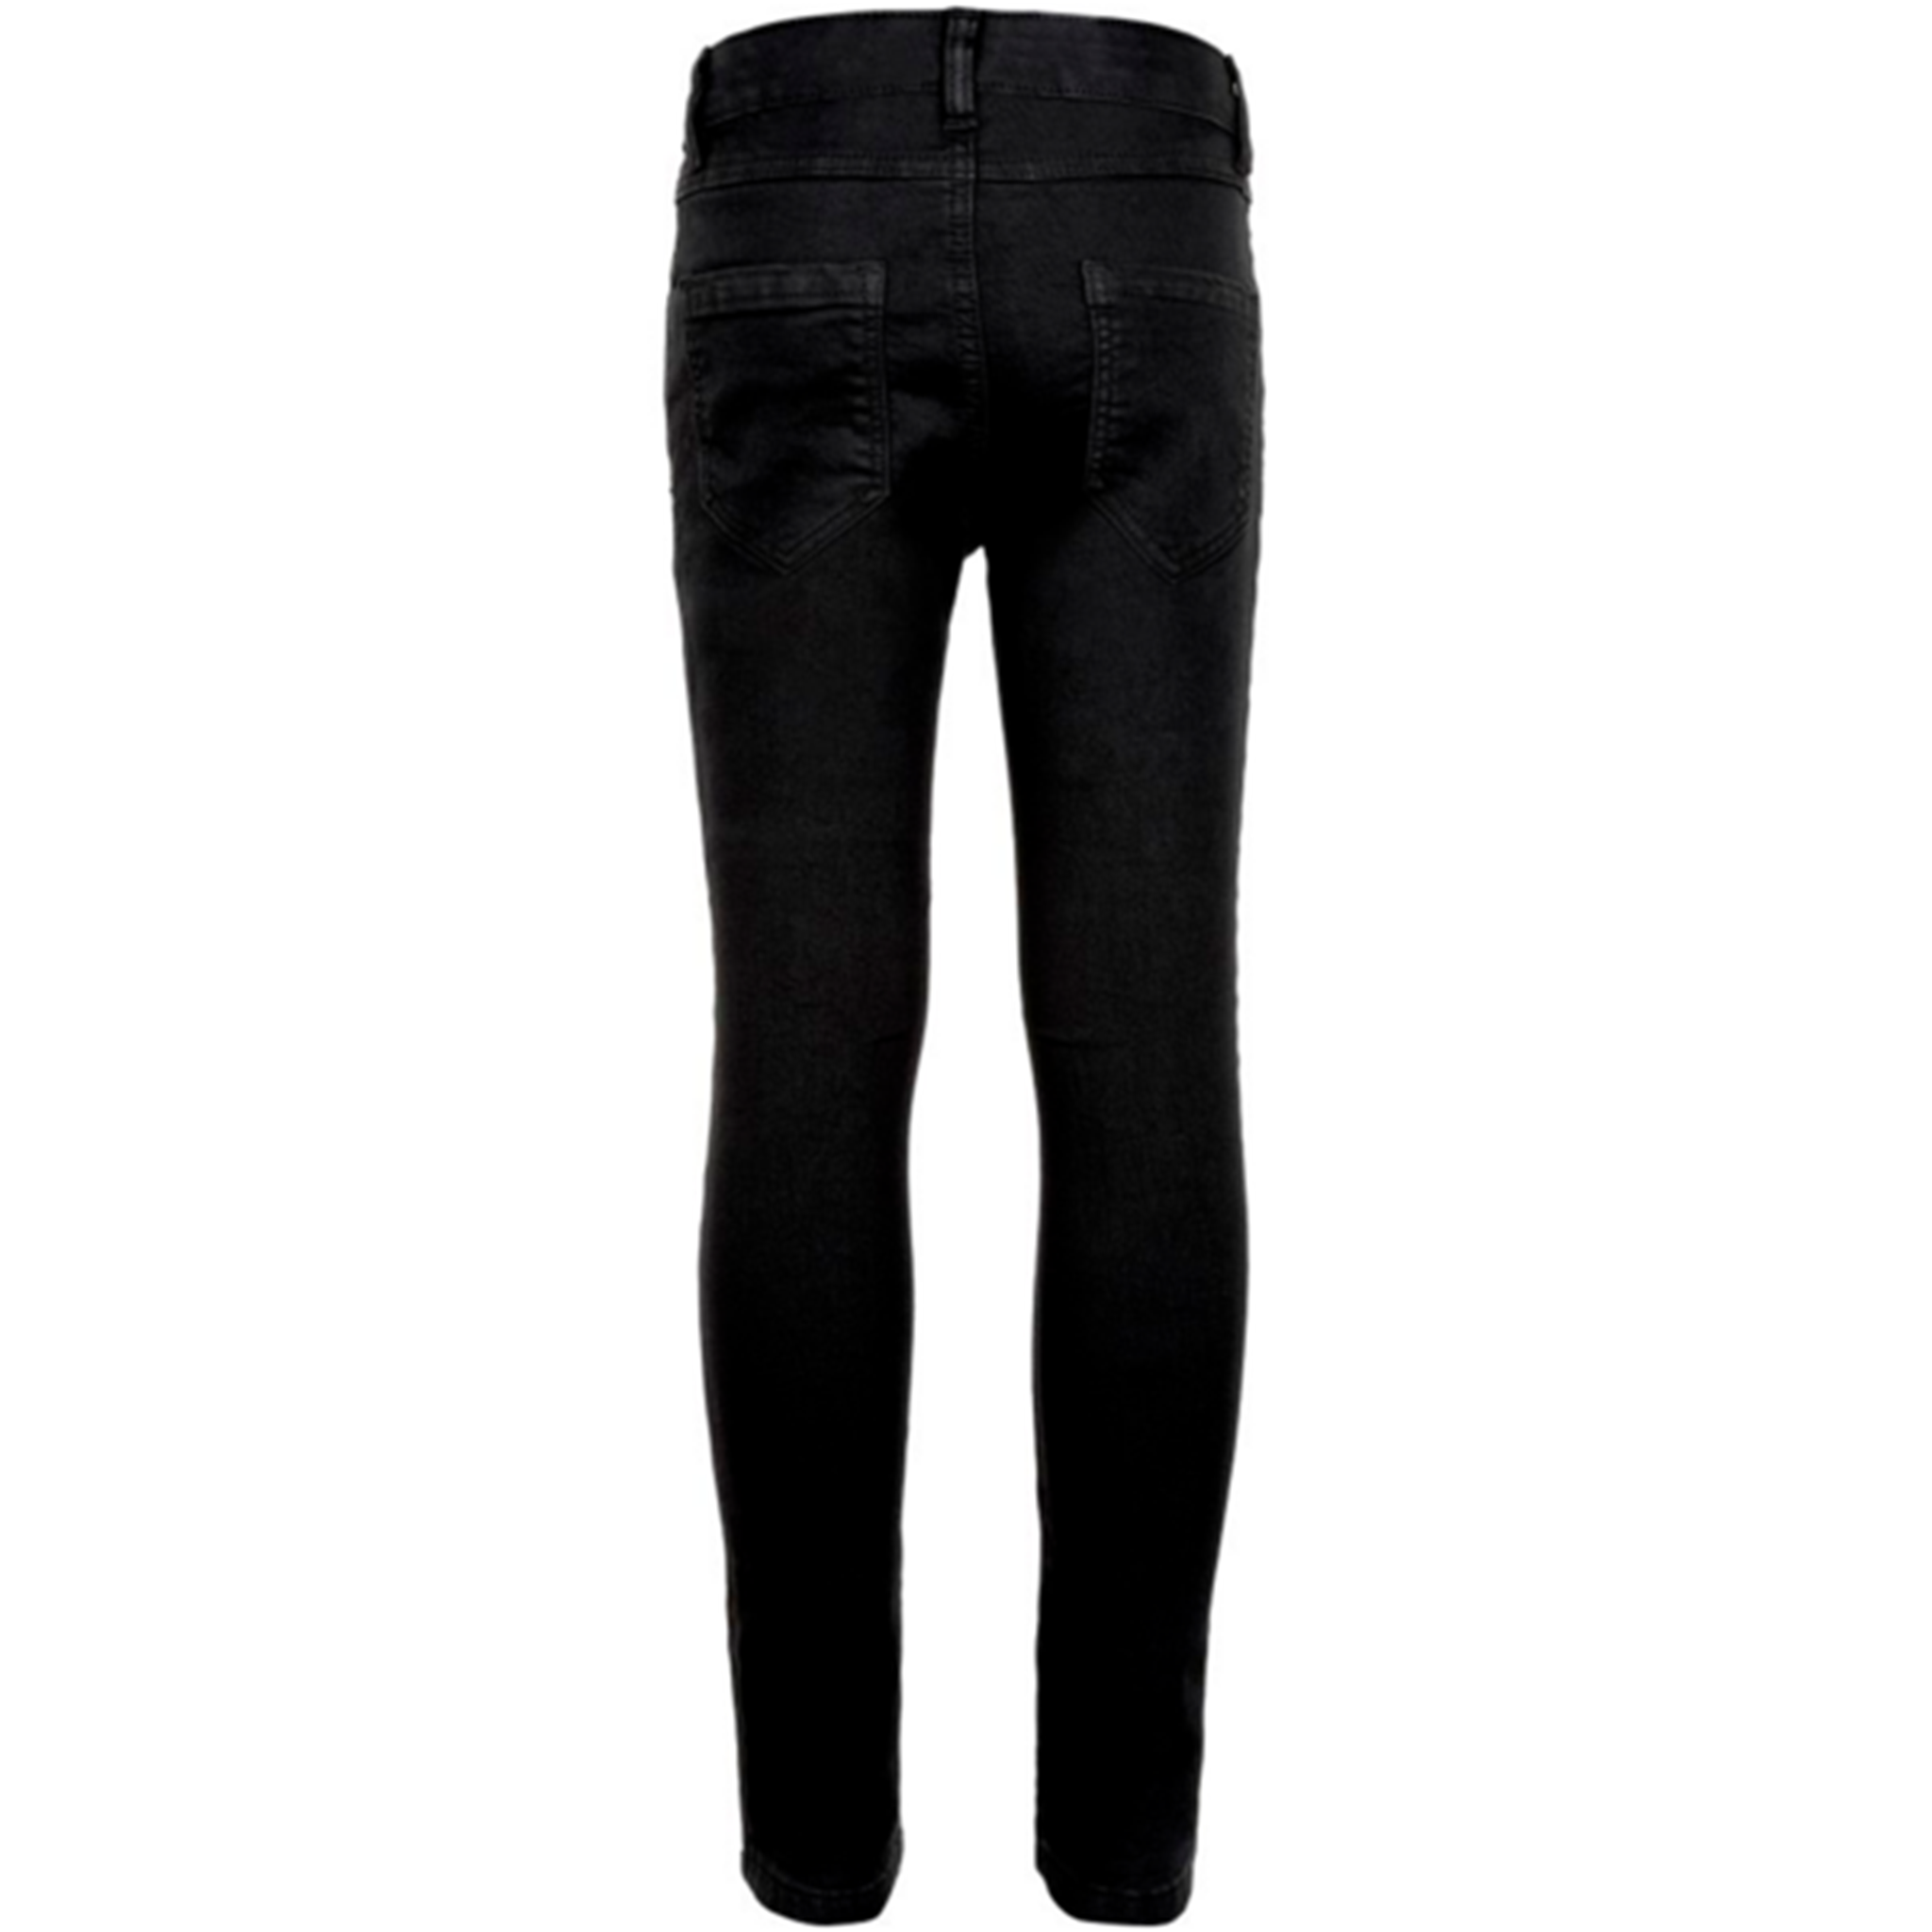 The New Jeans Slim Black 2